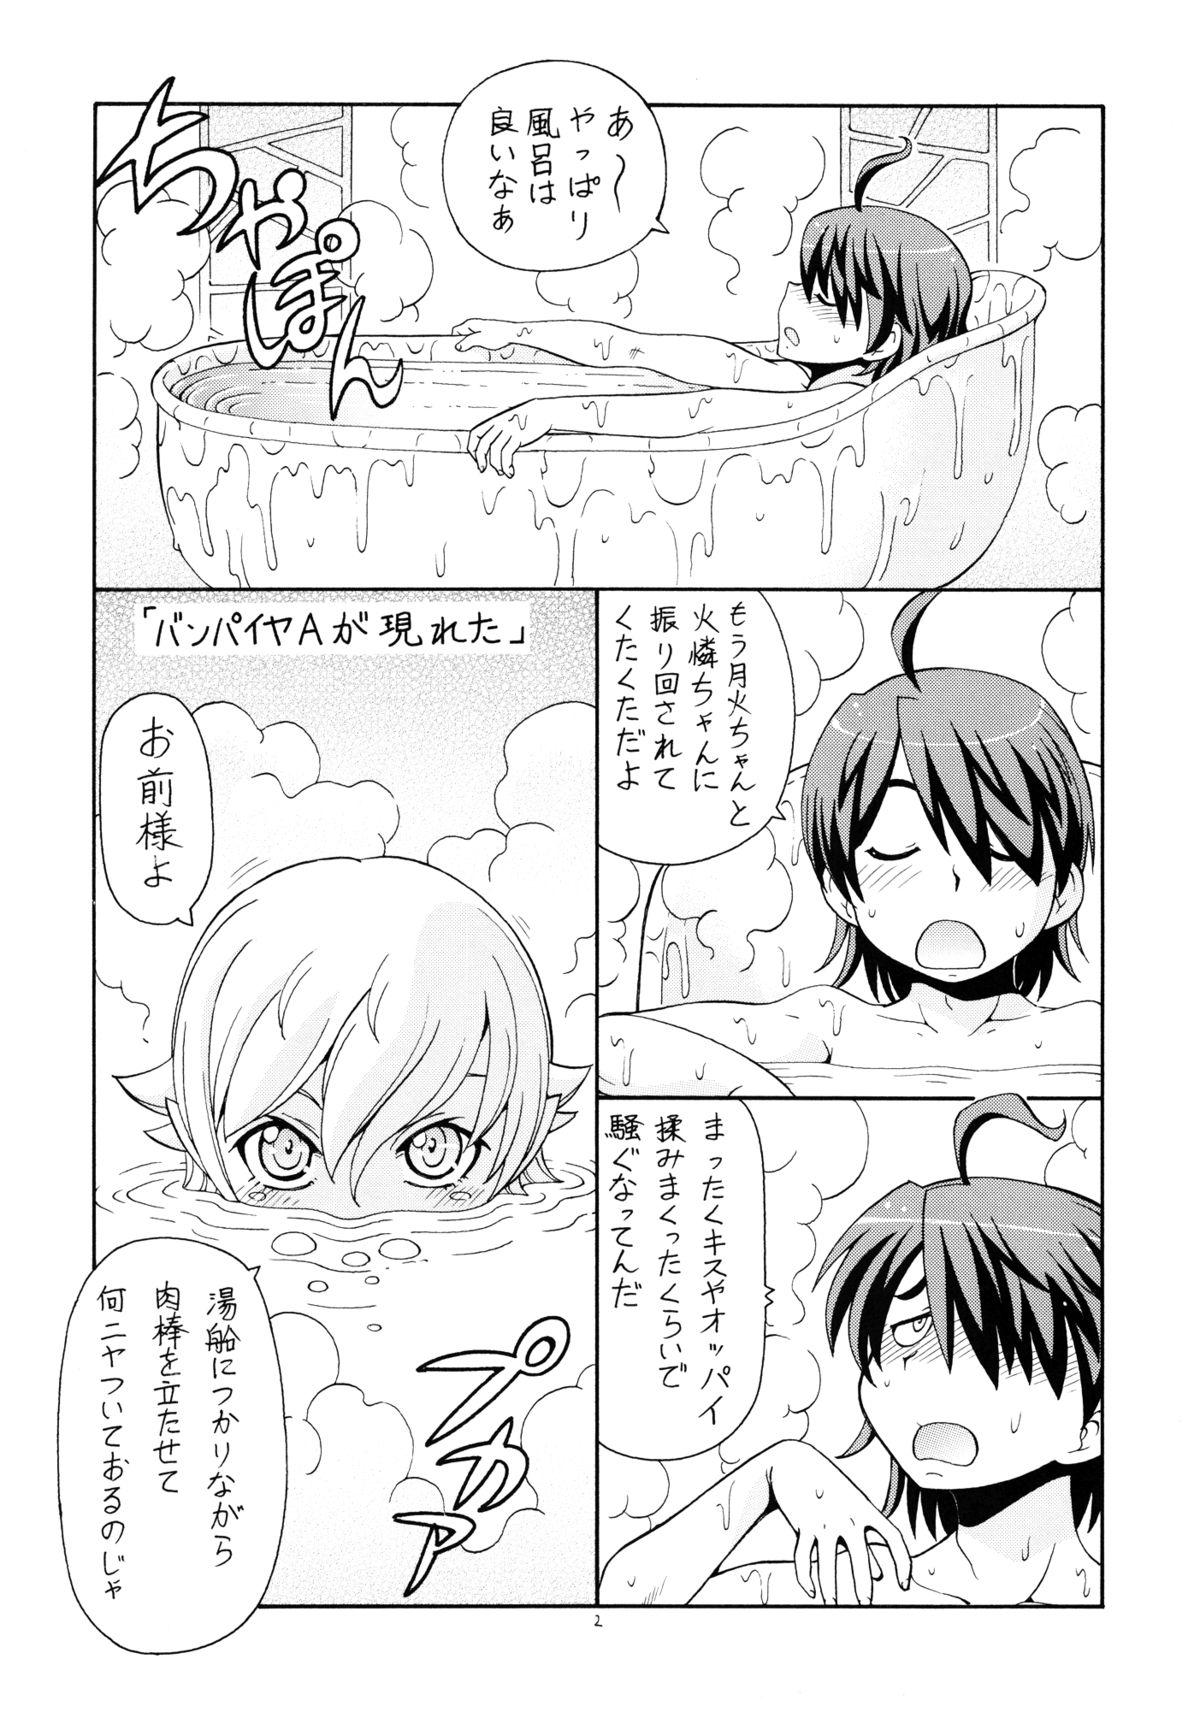 Van Hito ni Hakanai to Kaite "Araragi" to Yomu 5&6 - Bakemonogatari The - Page 3